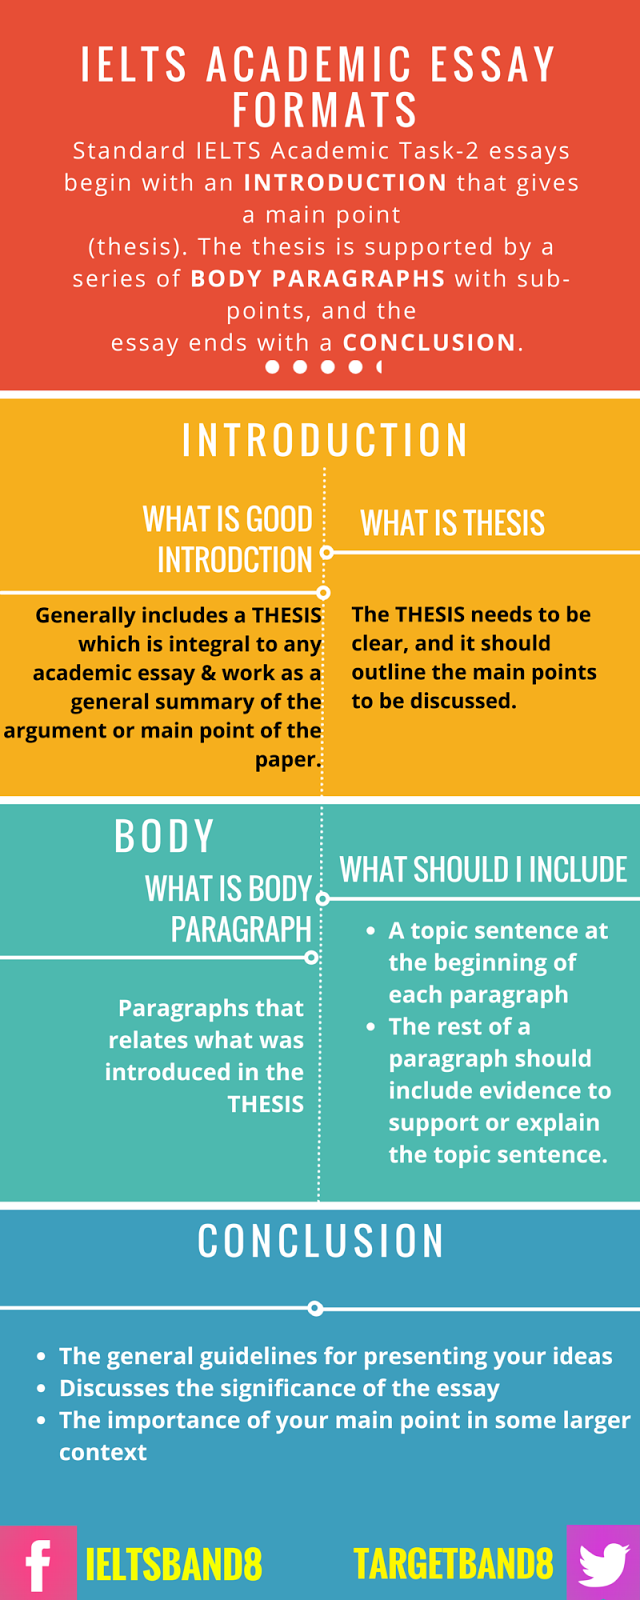 ielts writing task 2 essay structure pdf